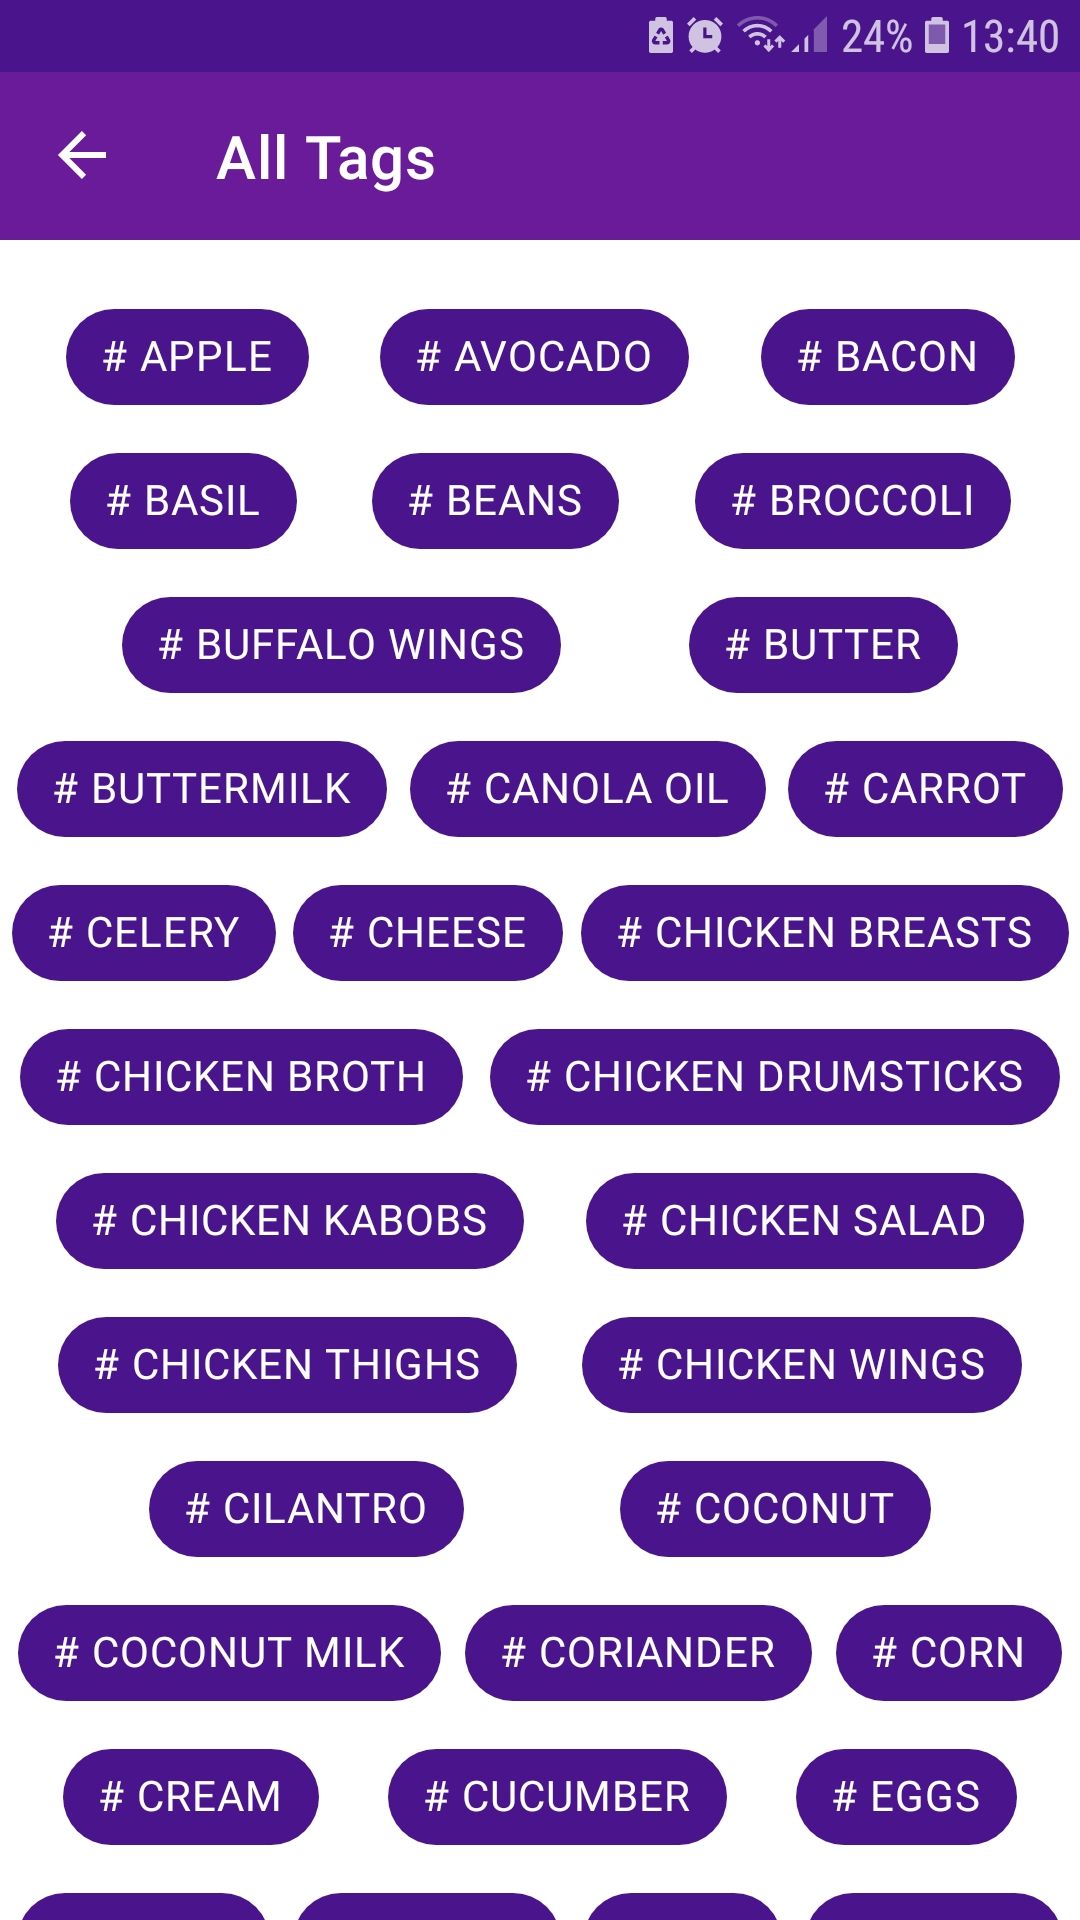 BBQ Chicken Recipes mobile recipe app tags